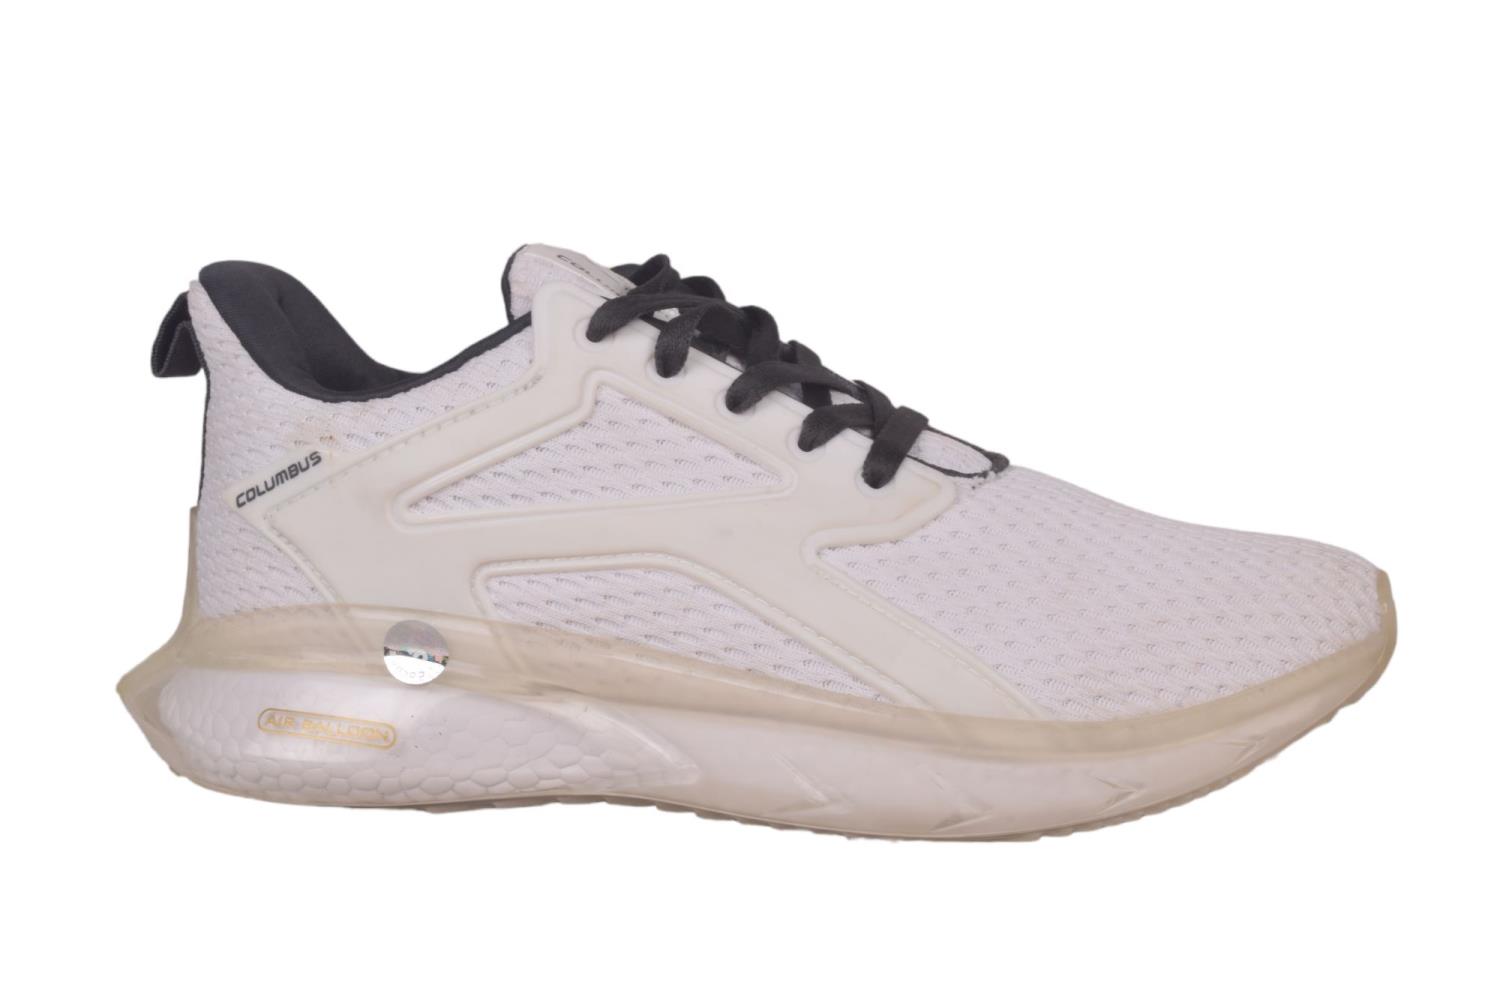 Columbus Running Shoes For Men ( Navy Blue ) for Men - Buy Columbus Men's  Sport Shoes at 40% off. |Paytm Mall